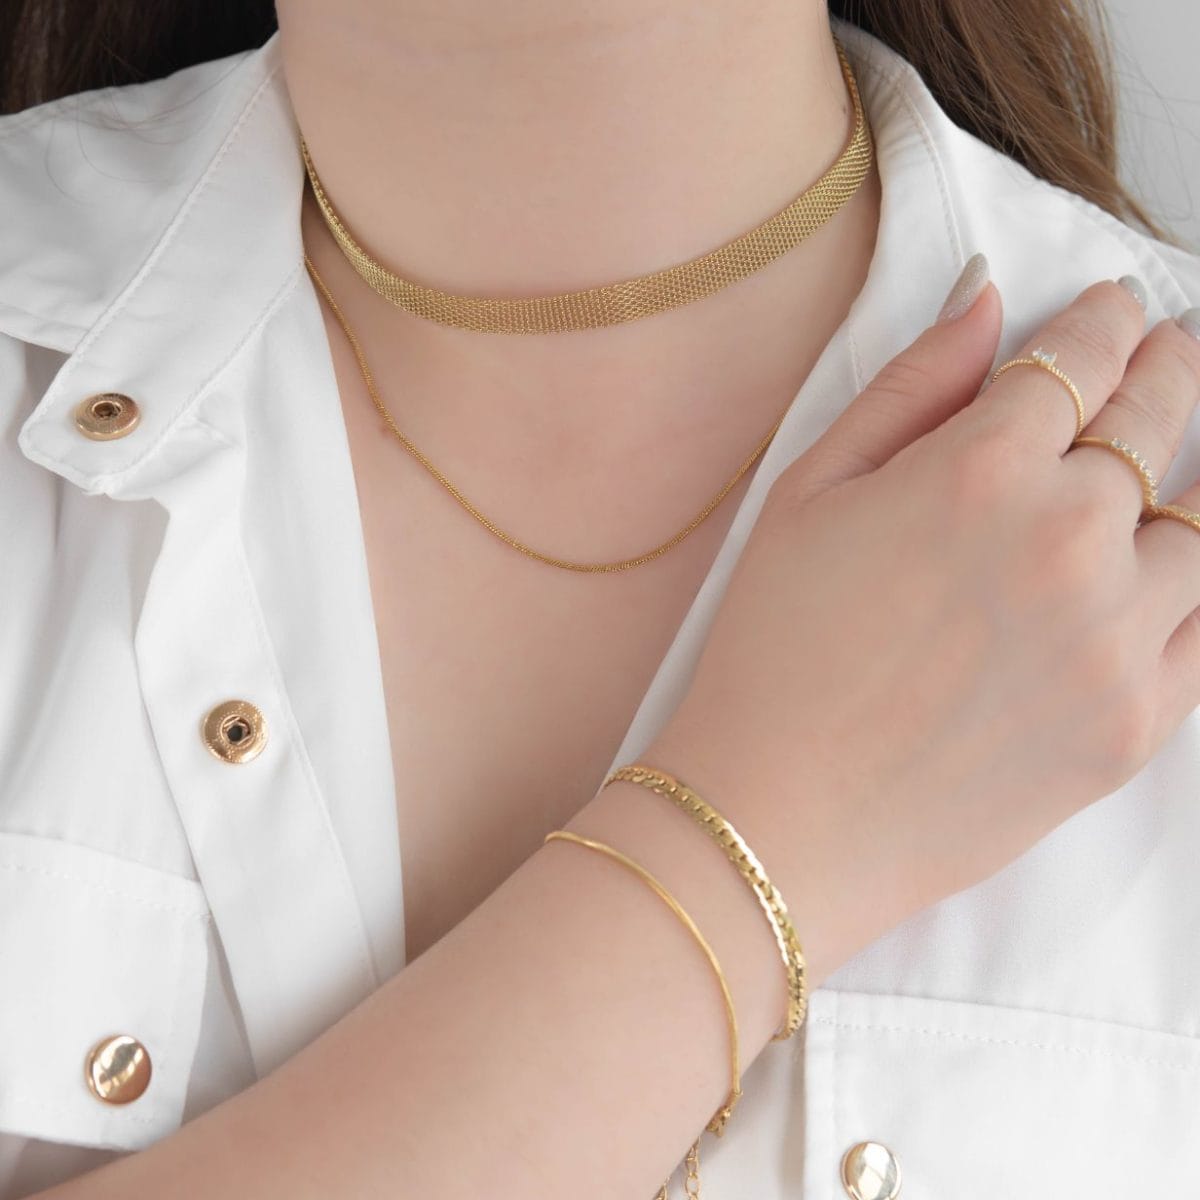 https://m.clubbella.co/product/tinnie-minimal-thin-chain-necklace/ Tinnie Minimal thin chain necklace